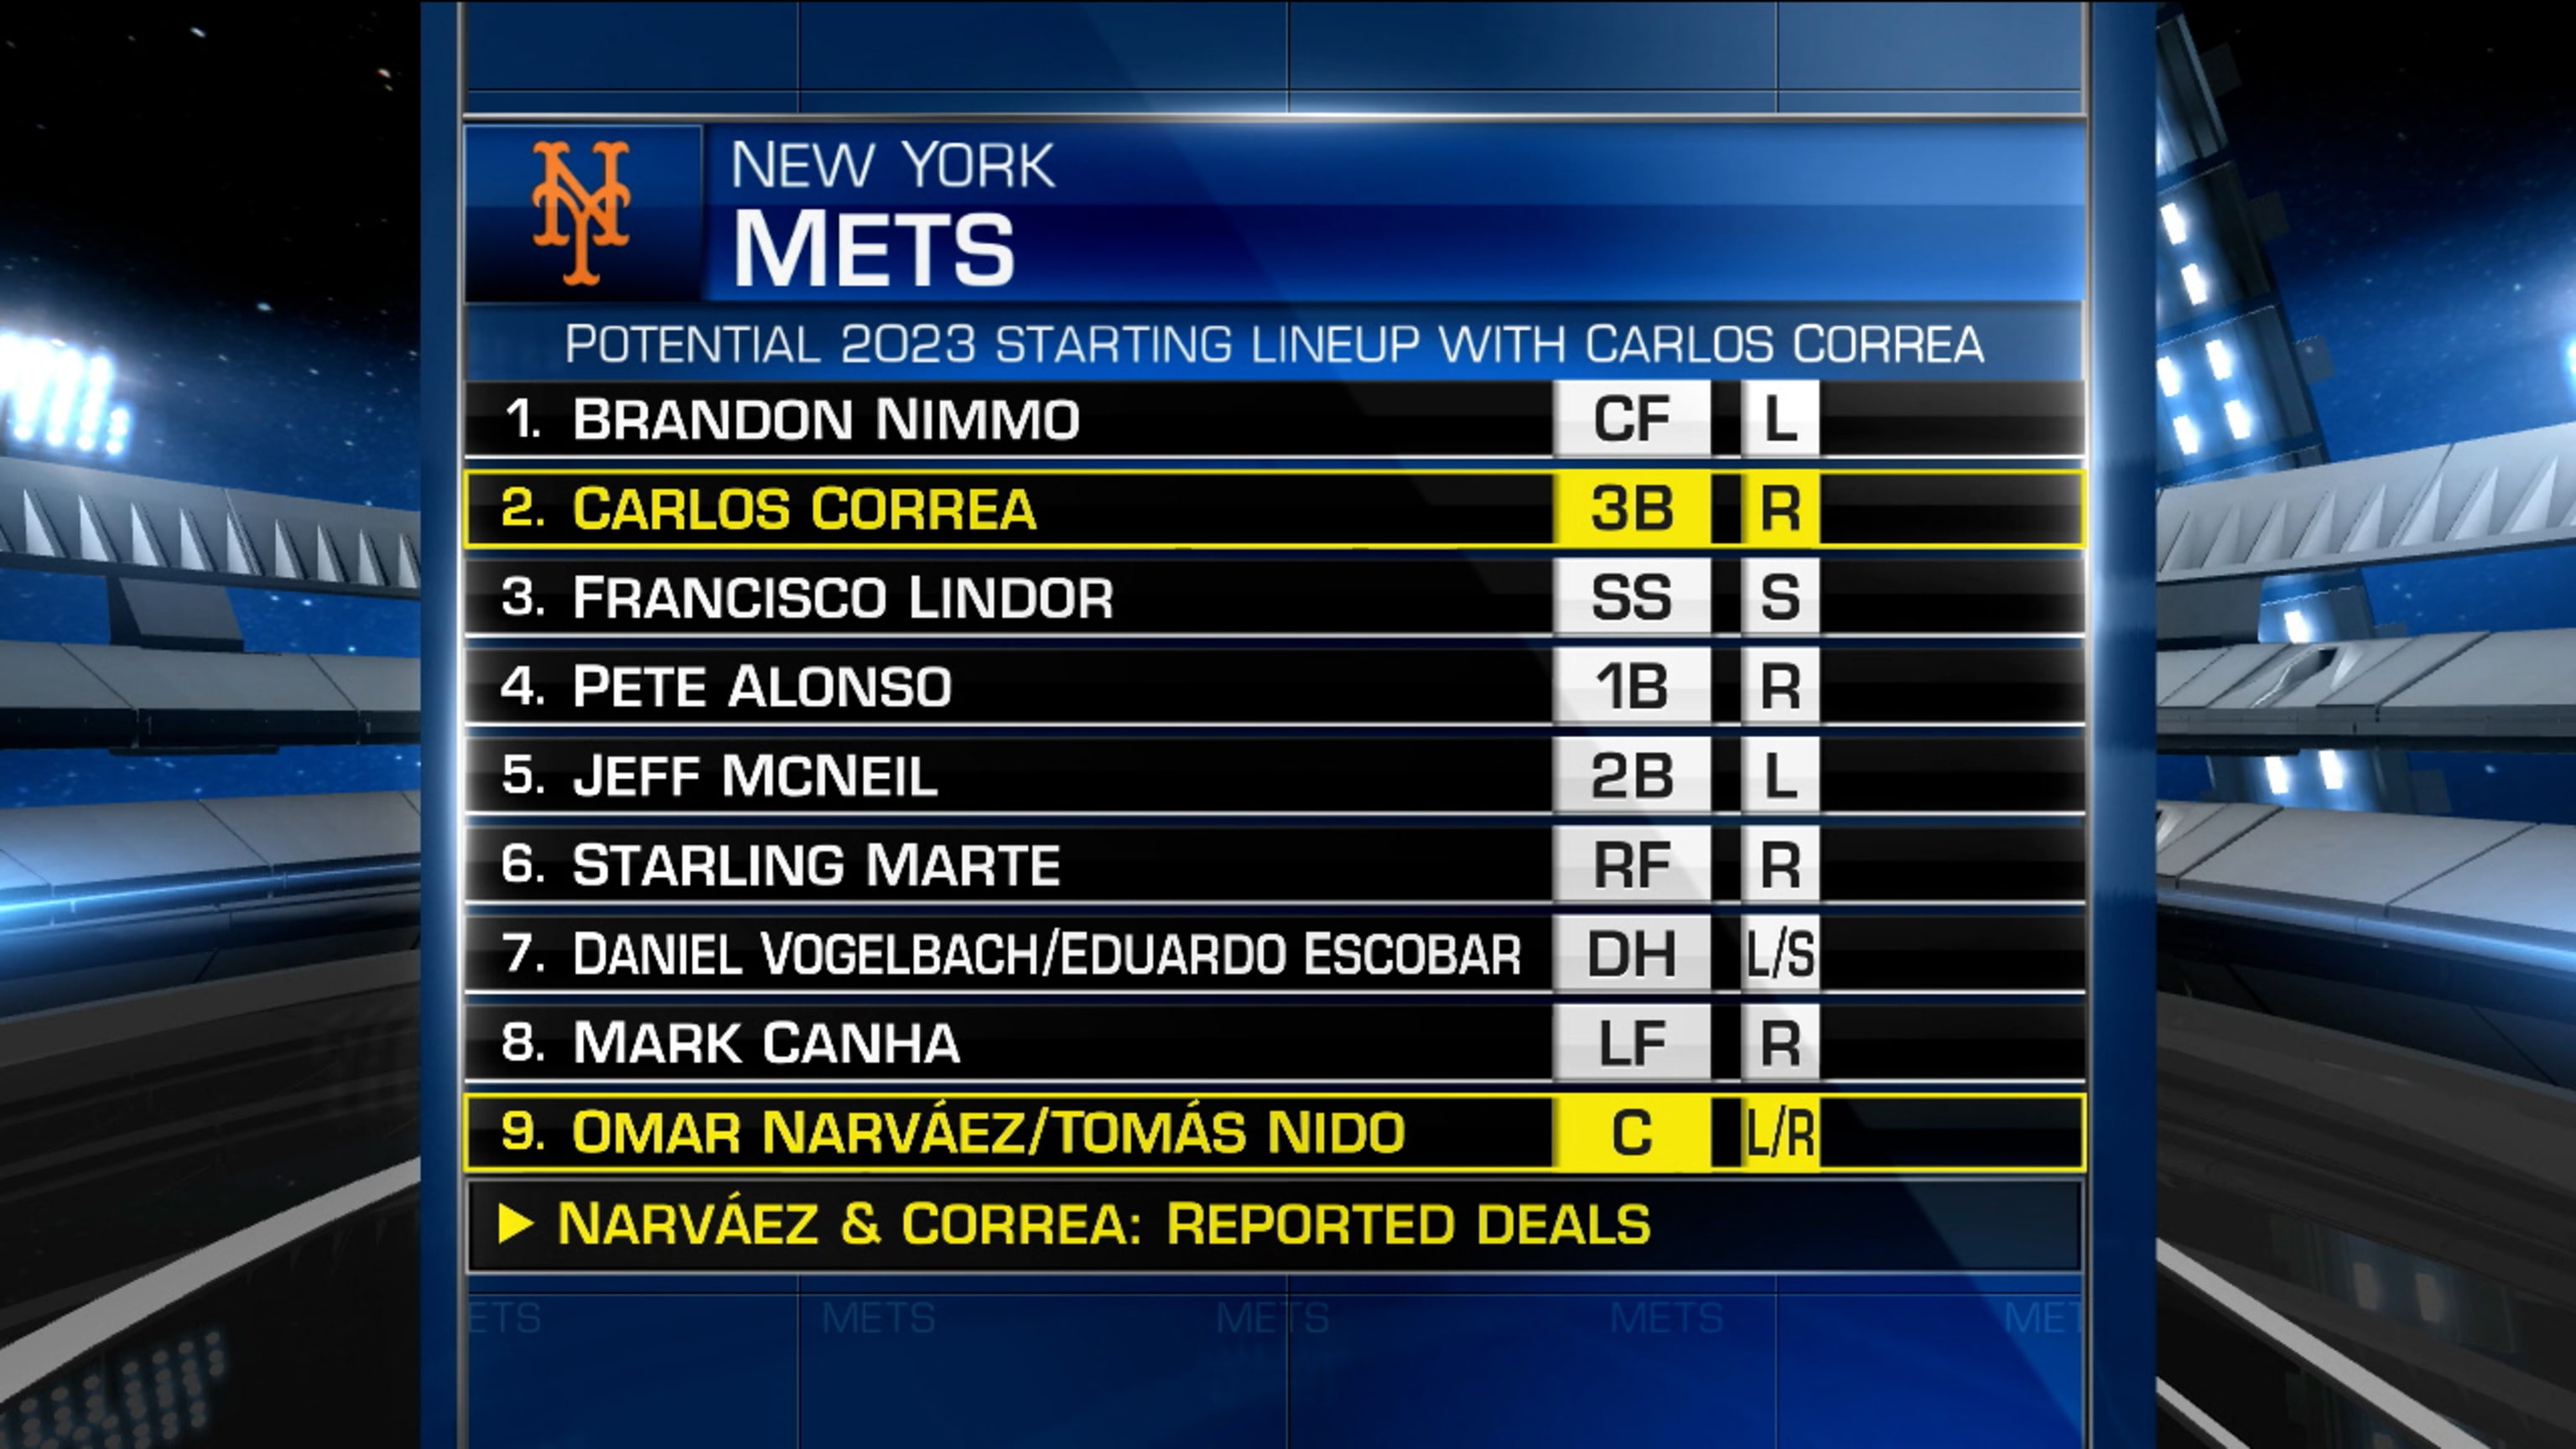 Carlos Correa brings balance, power to Mets lineup